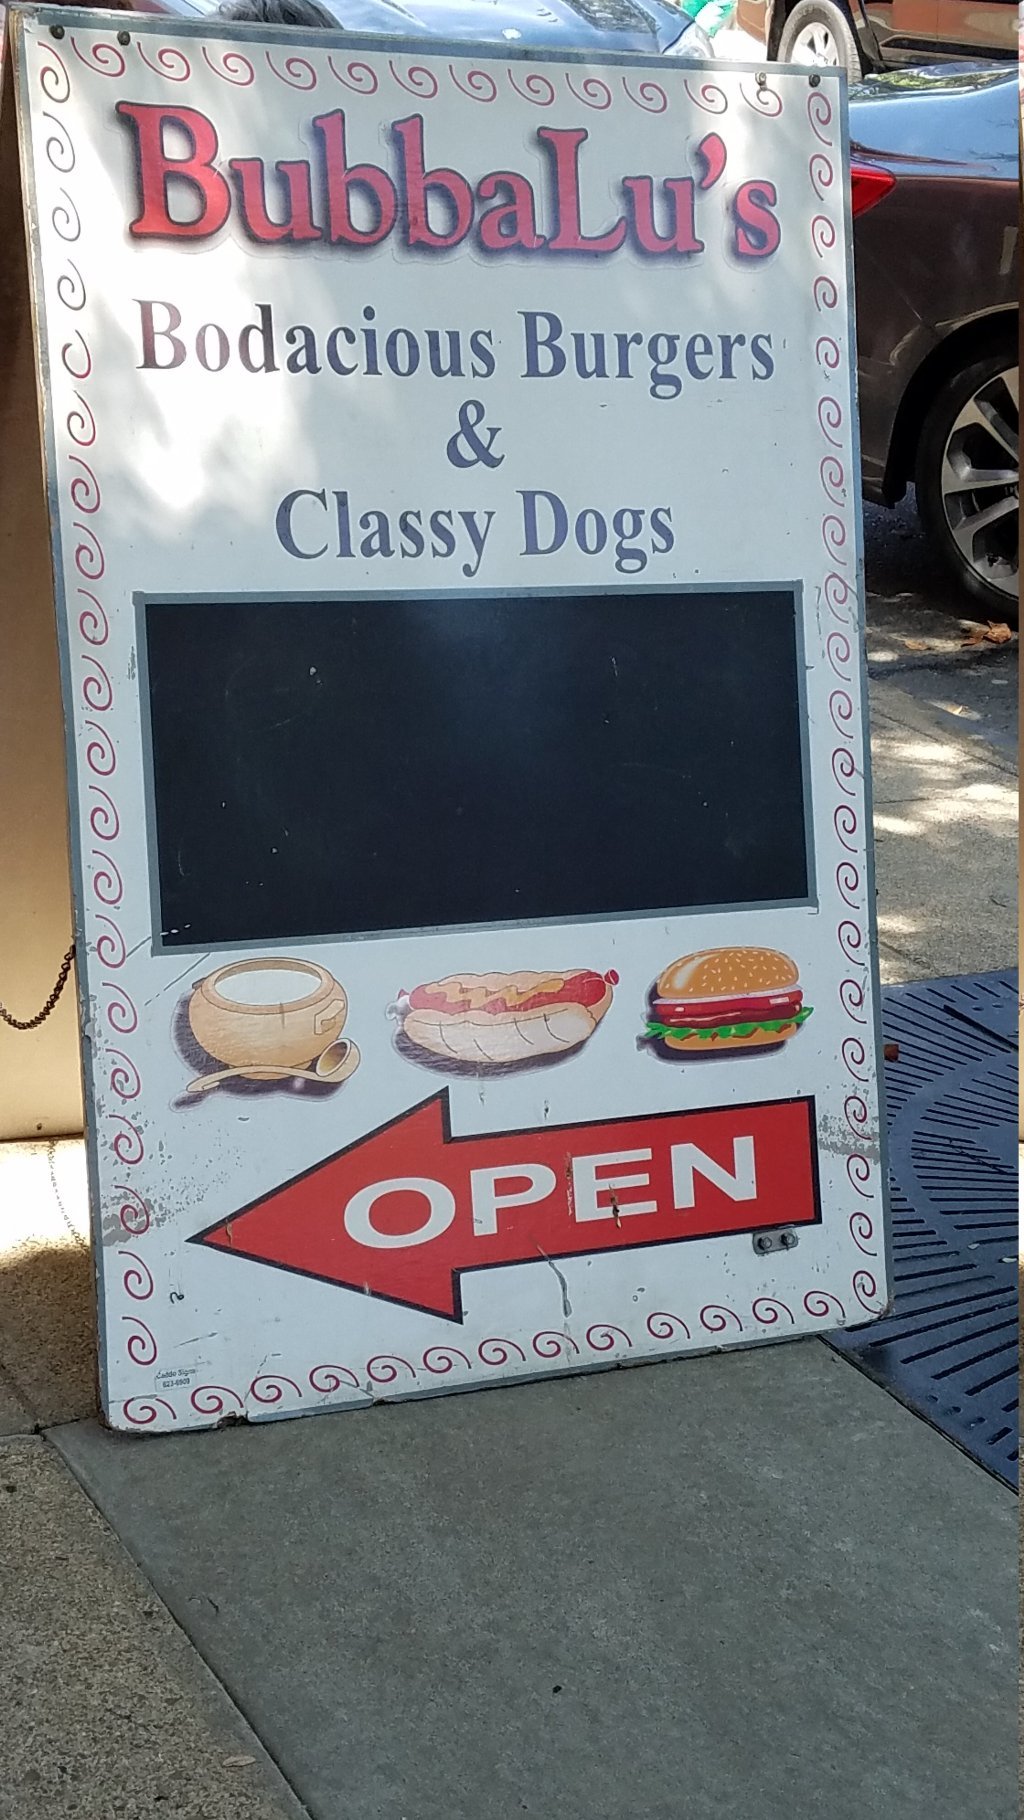 BubbaLus Bodacious Burgers Classy Dogs